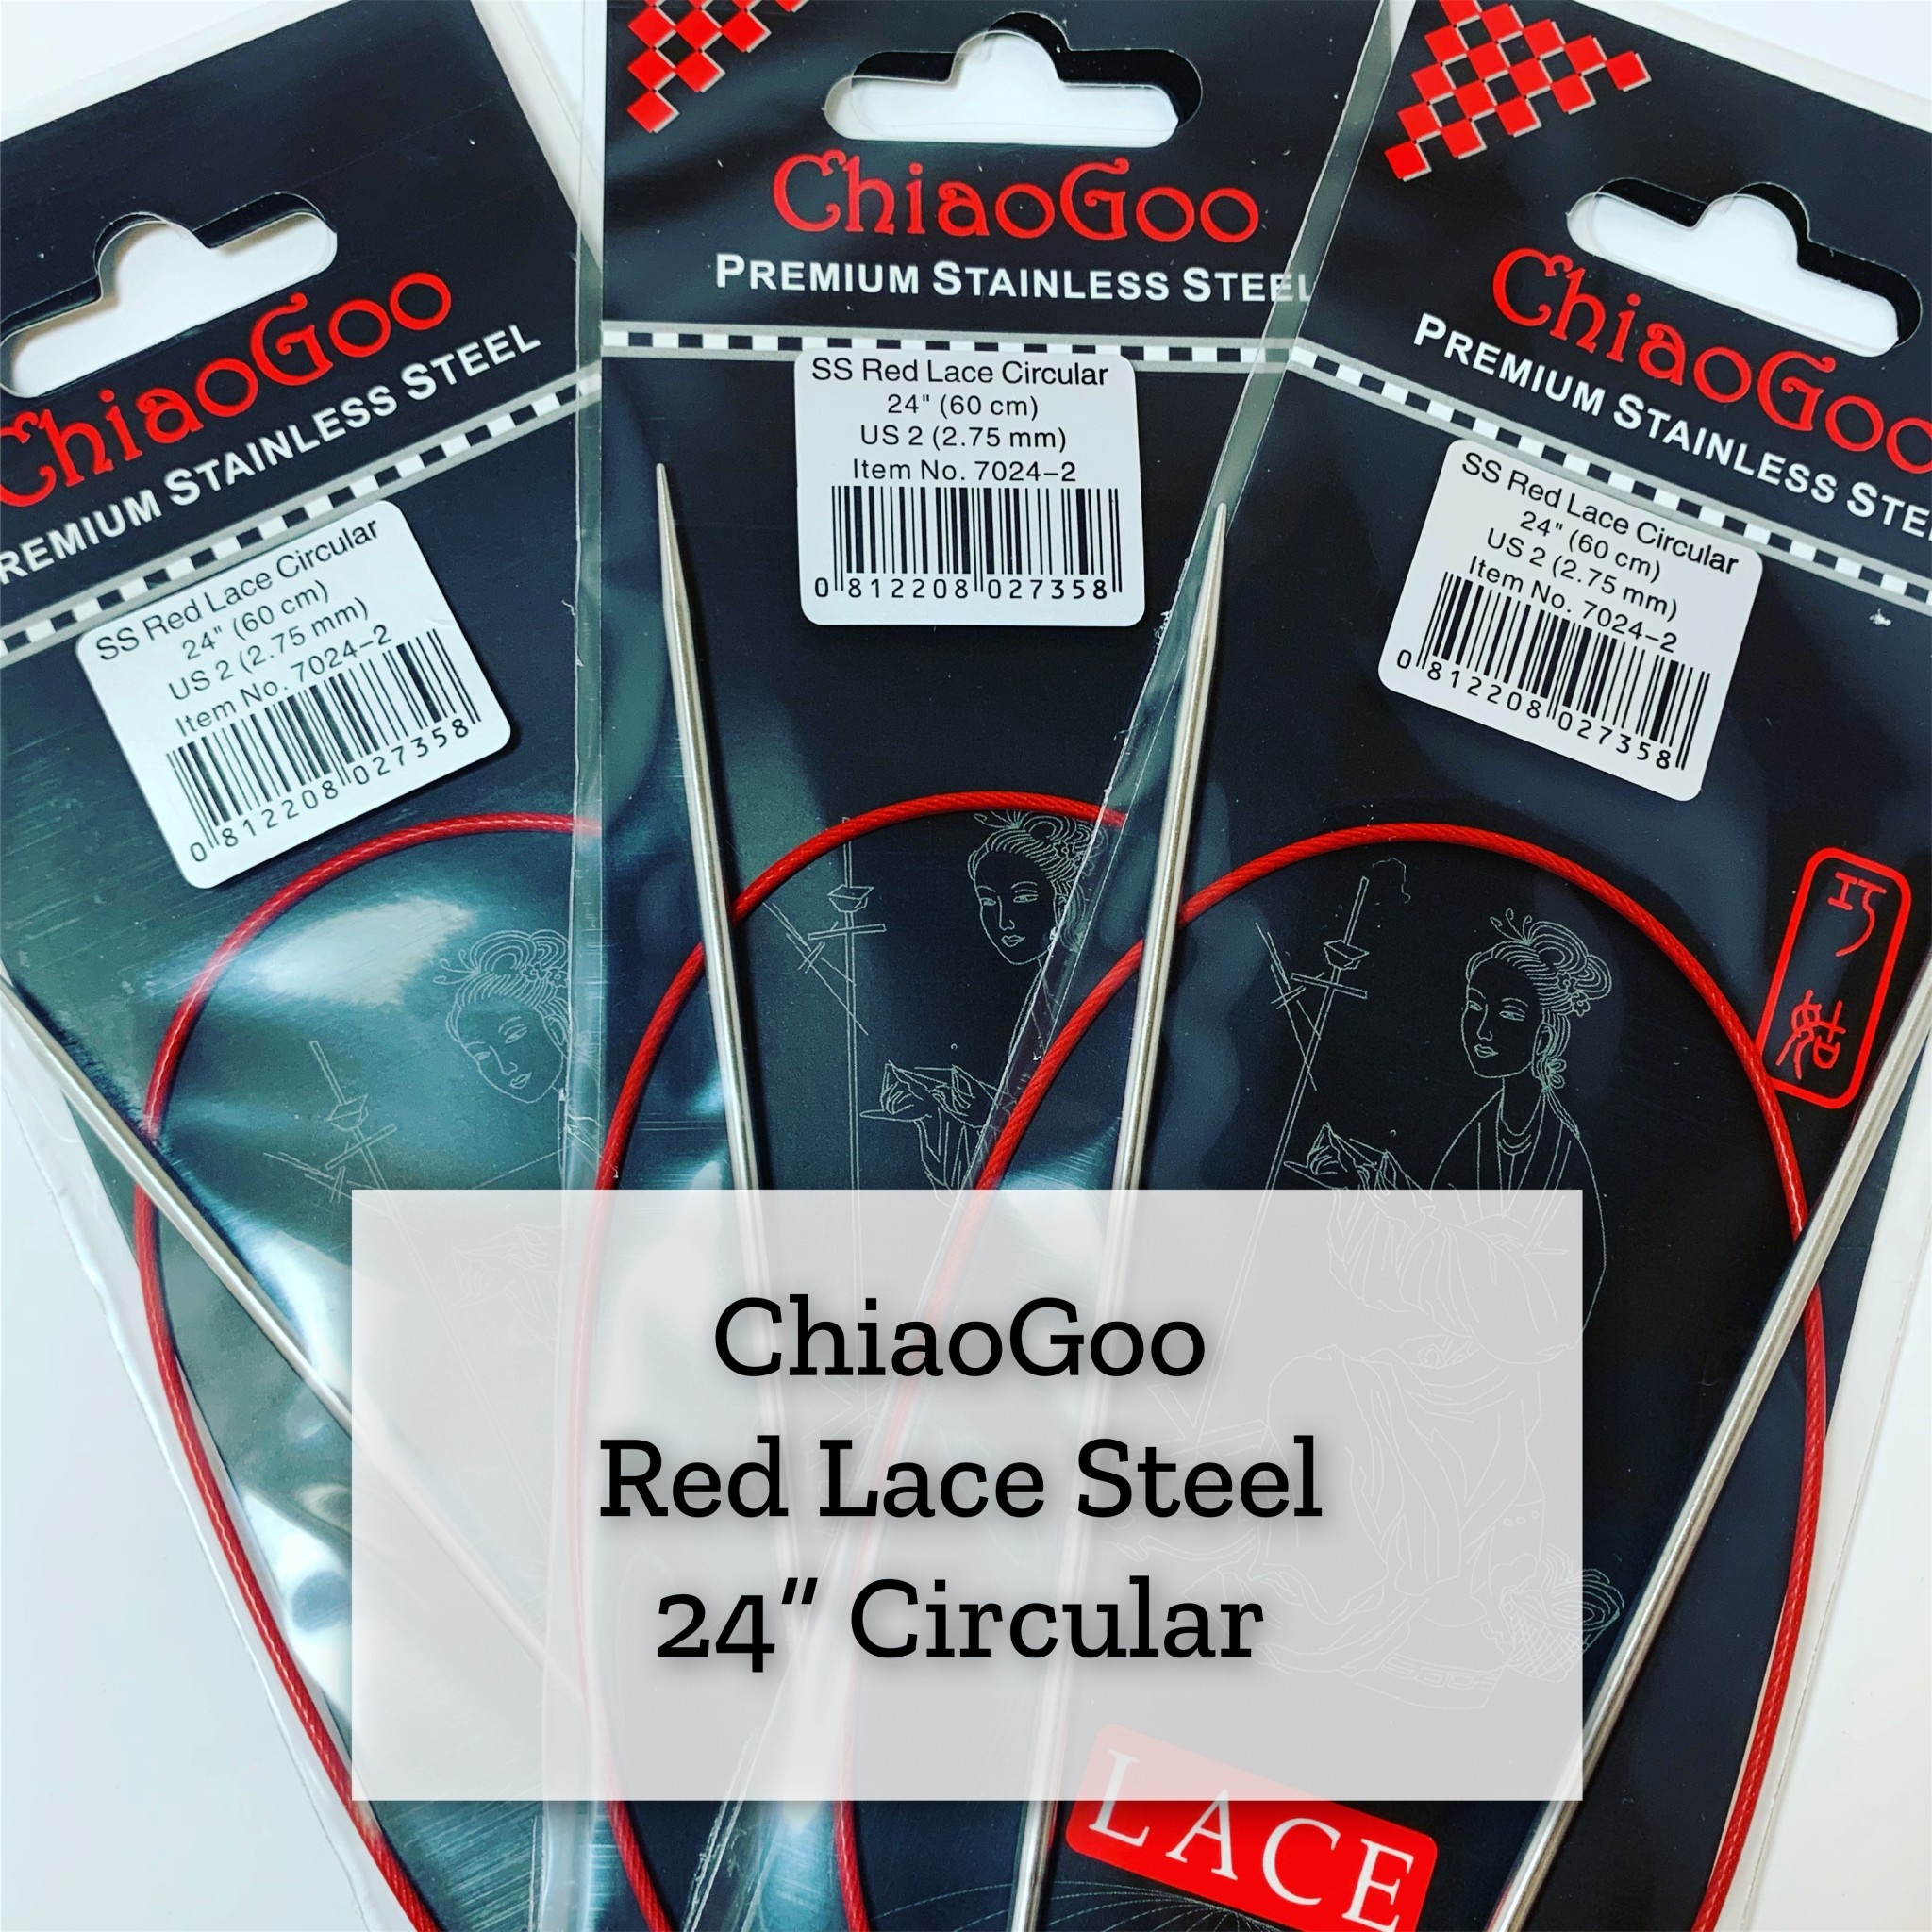 ChiaoGoo Red Lace Steel - 24" 2.25 mm